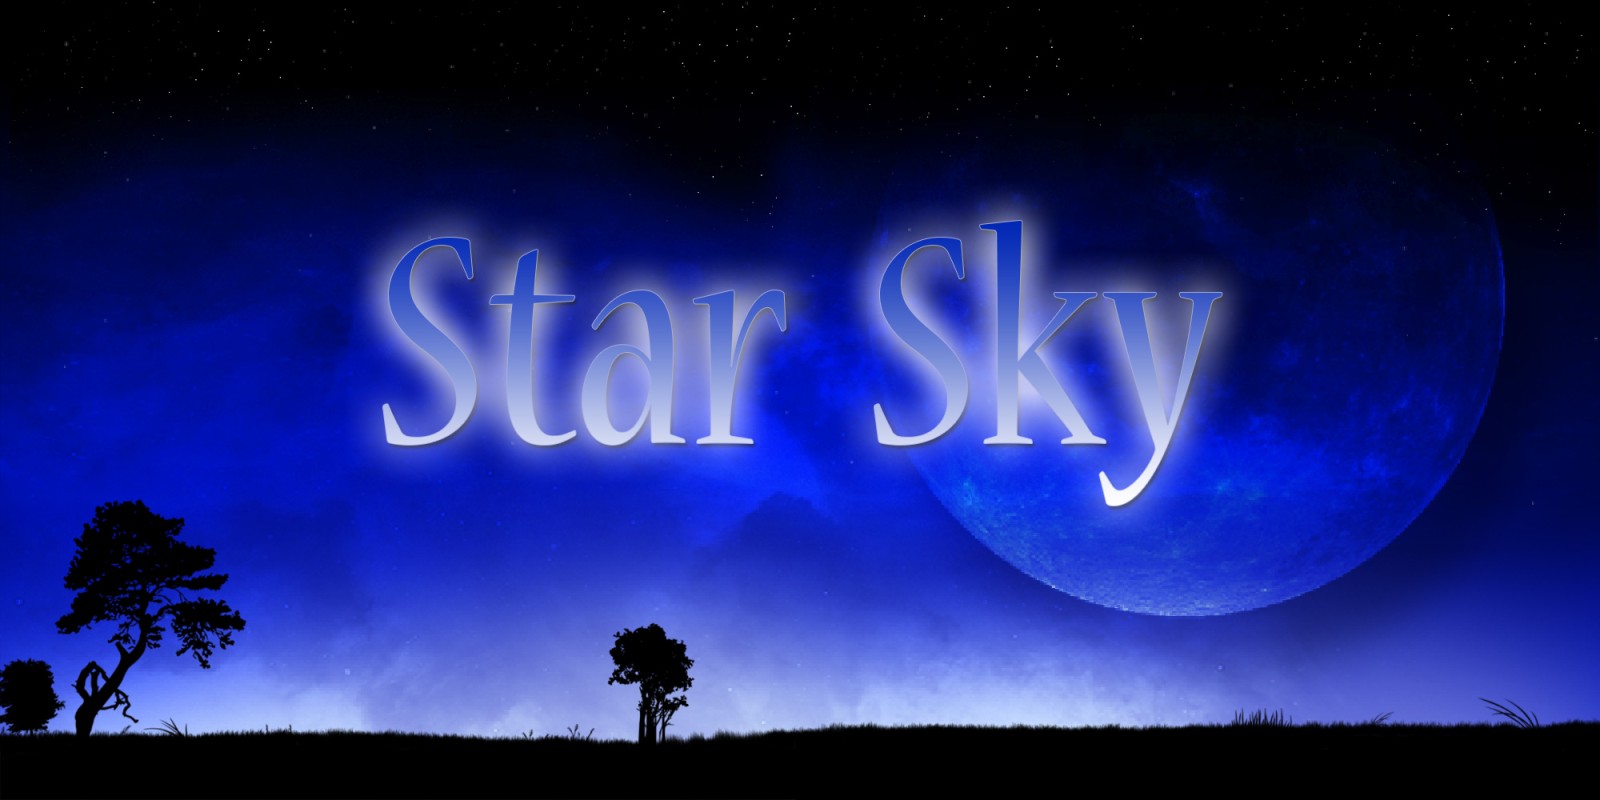 Star Sky Logo